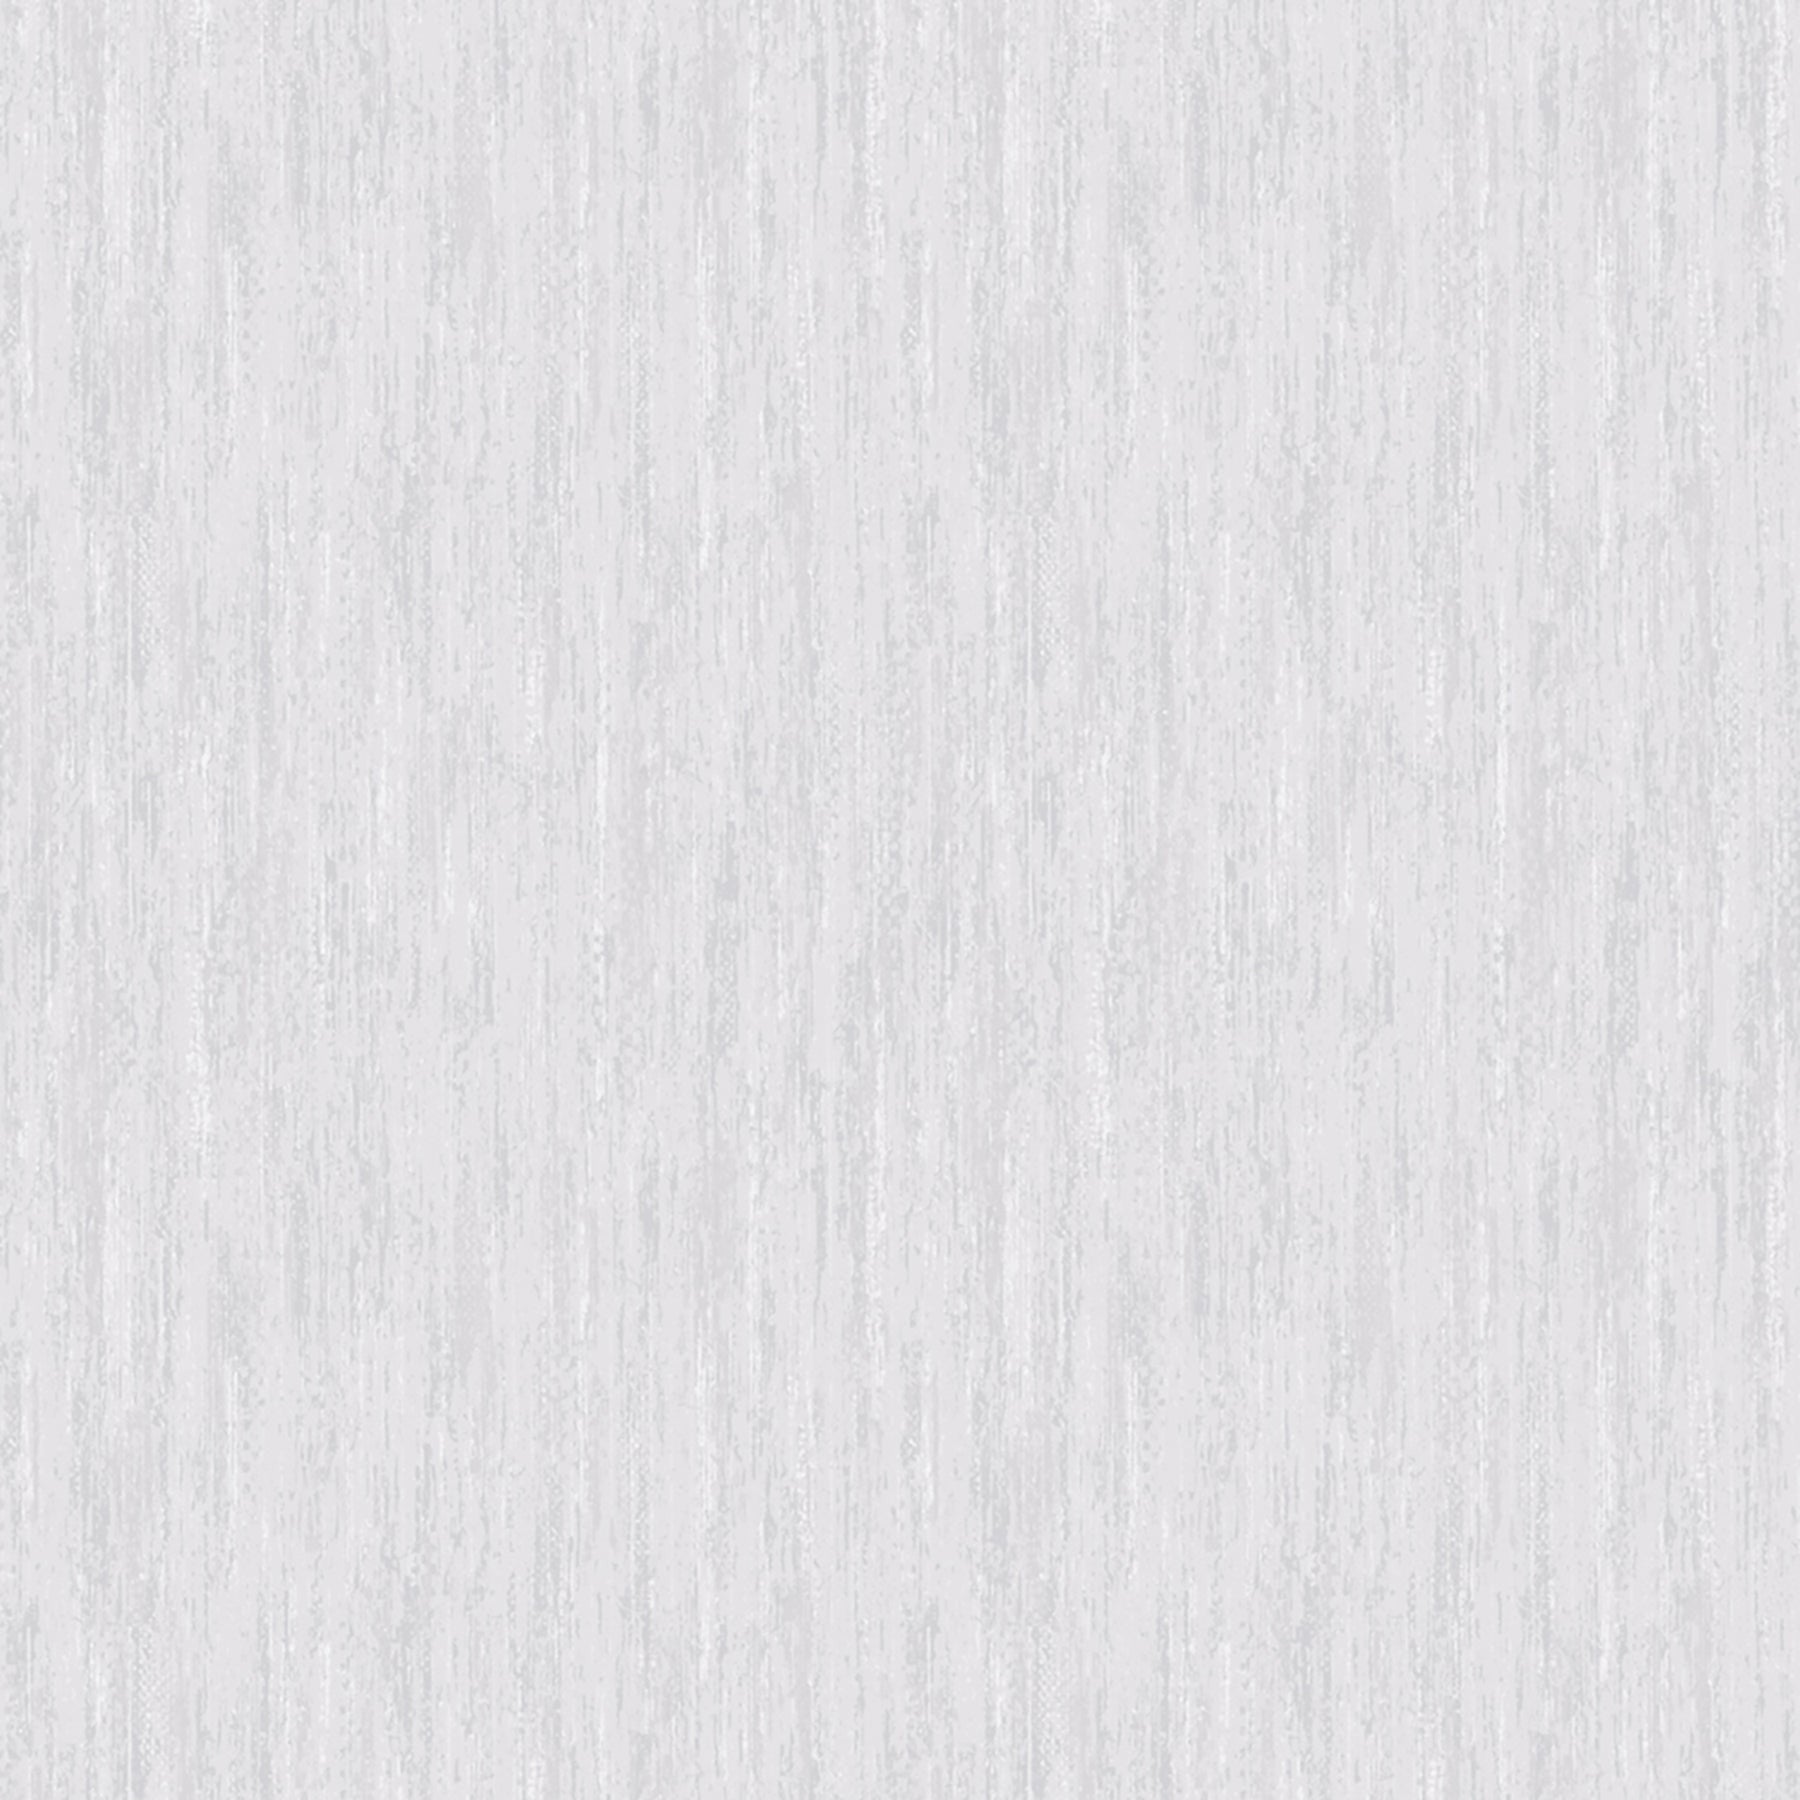 Save 2836-M0735 Shades of Grey Greys Texture Pattern Wallpaper by Advantage